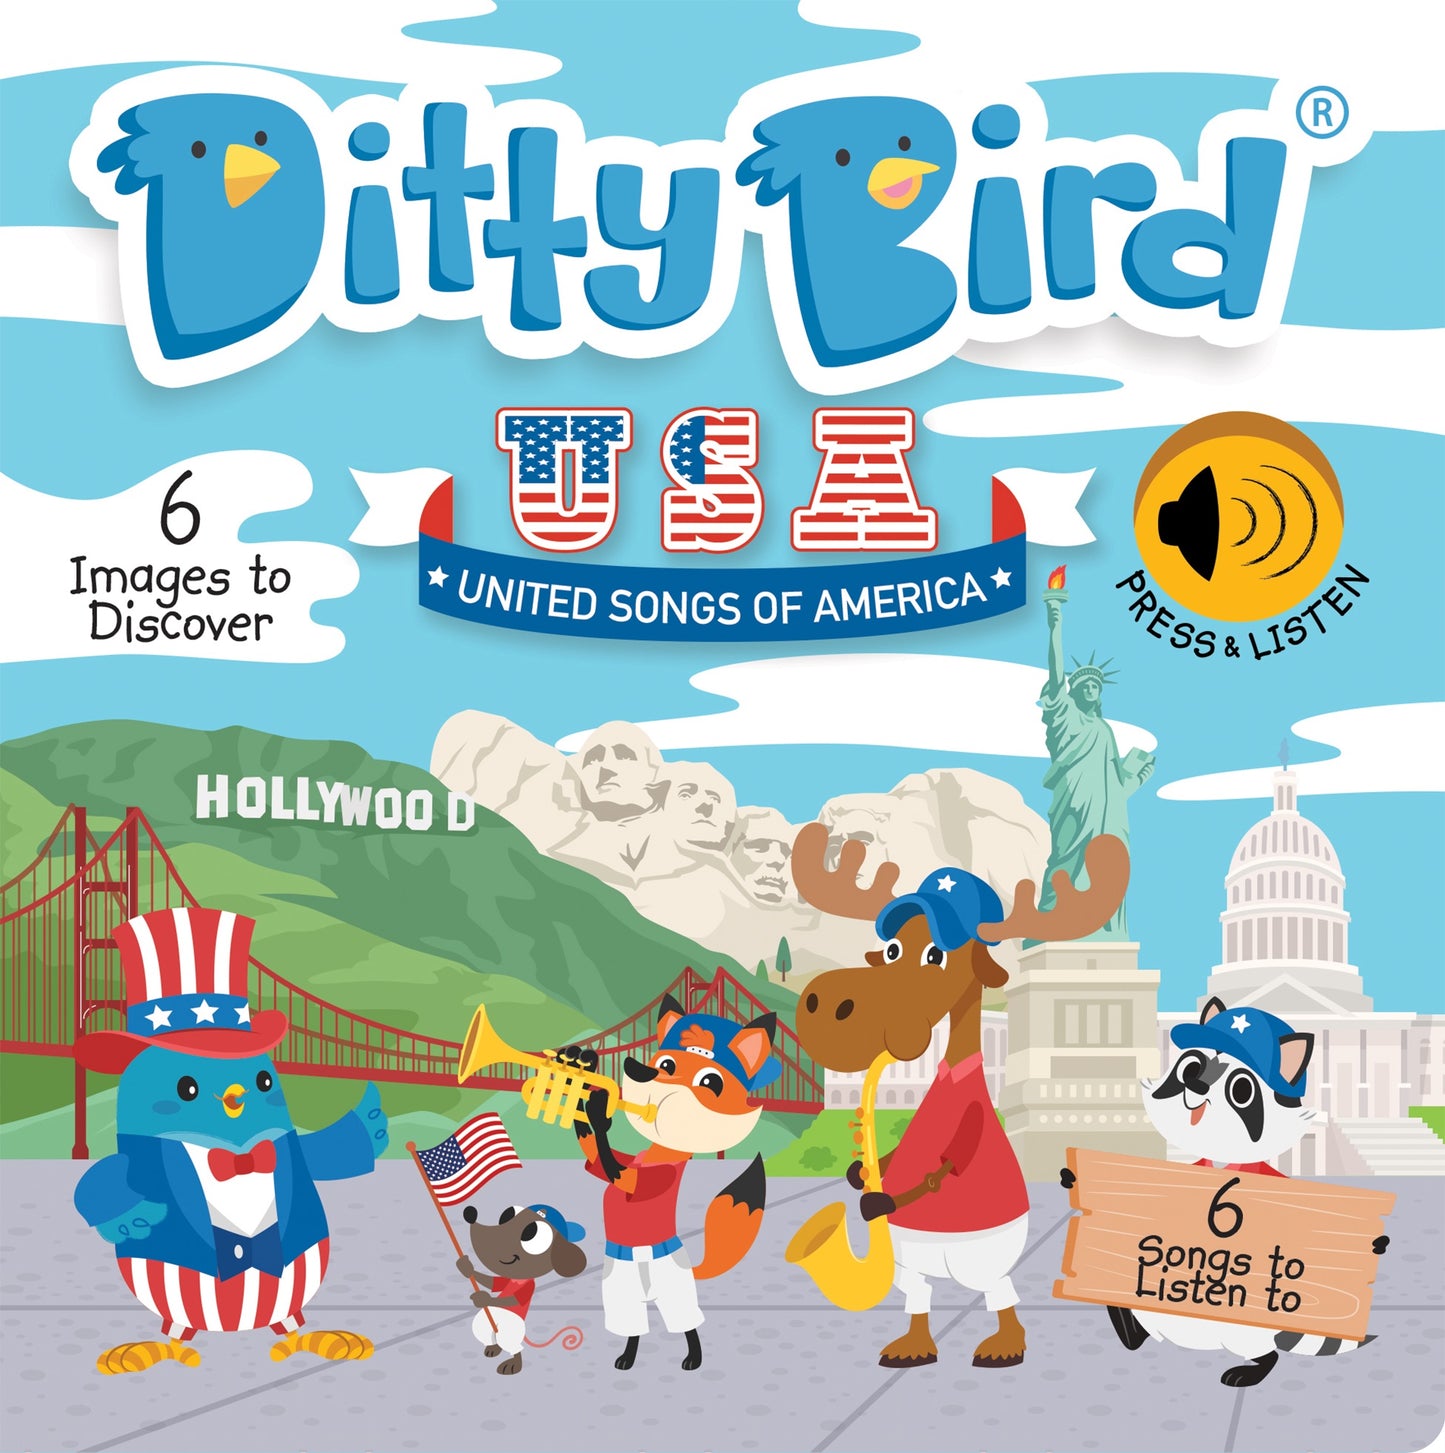 DITTY BIRD - UNITED SONGS OF AMERICA